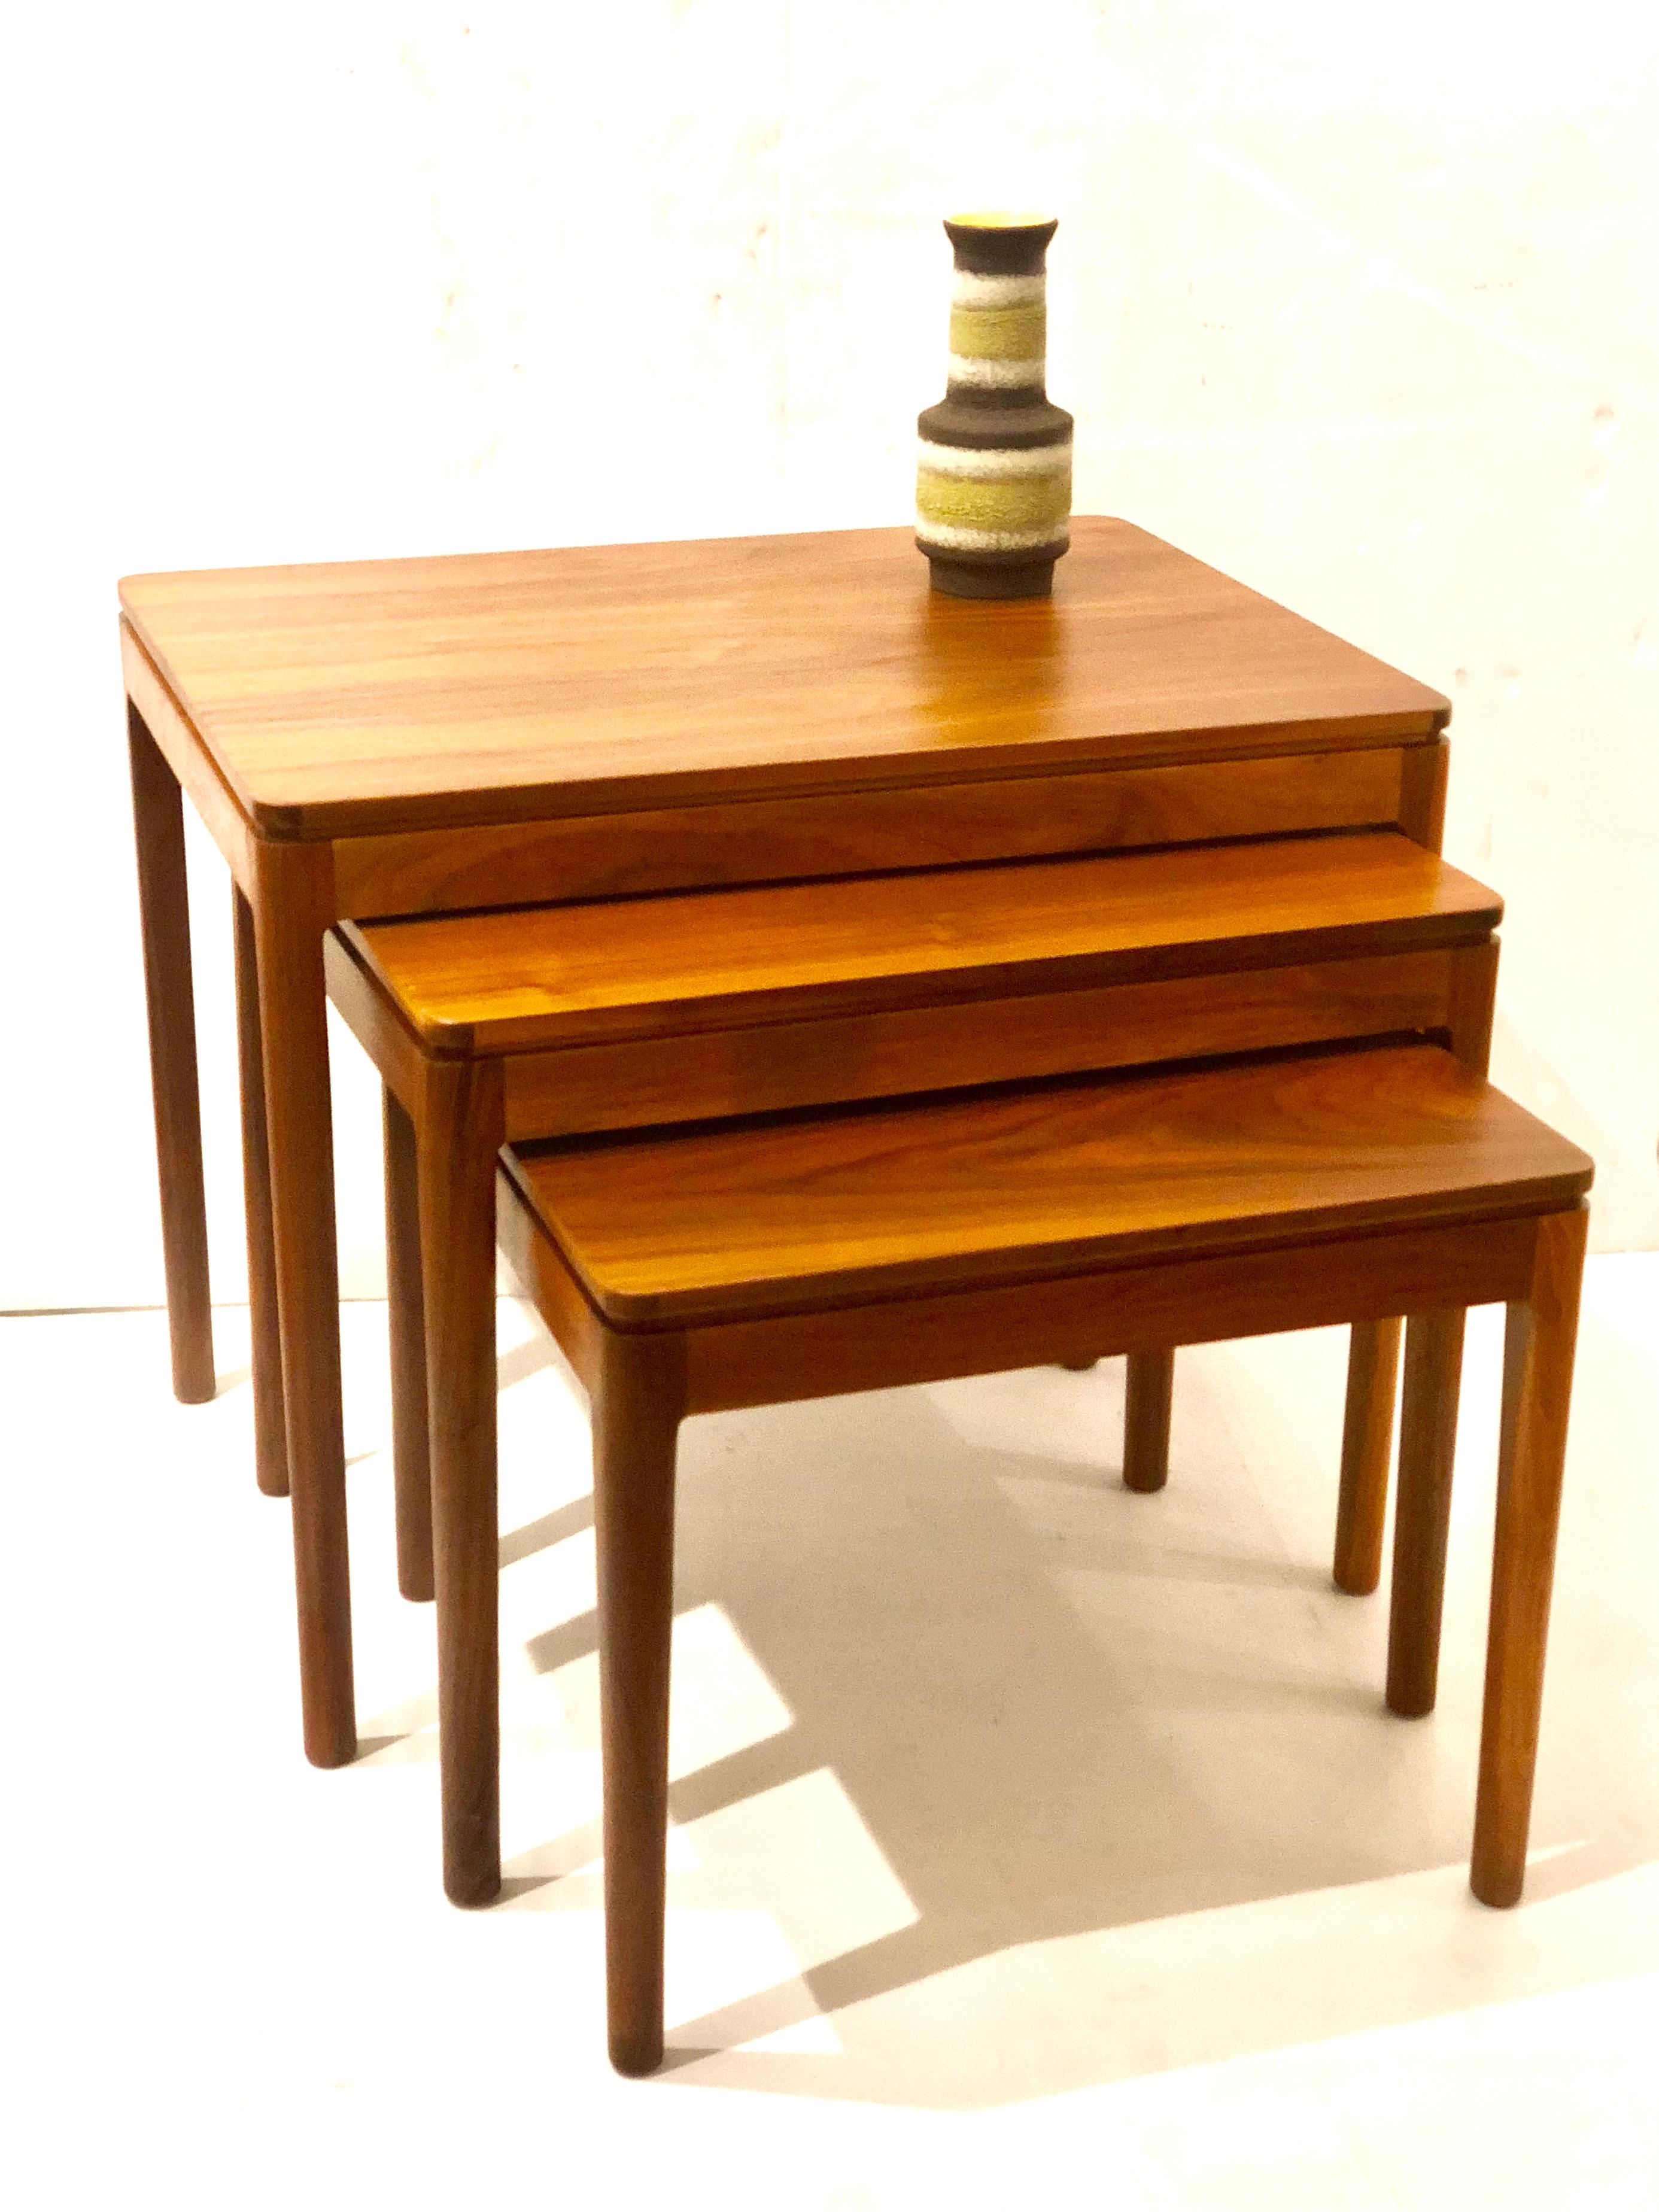 20th Century American Mid-Century Modern Set of 3 Walnut Nesting Tables by Drexel